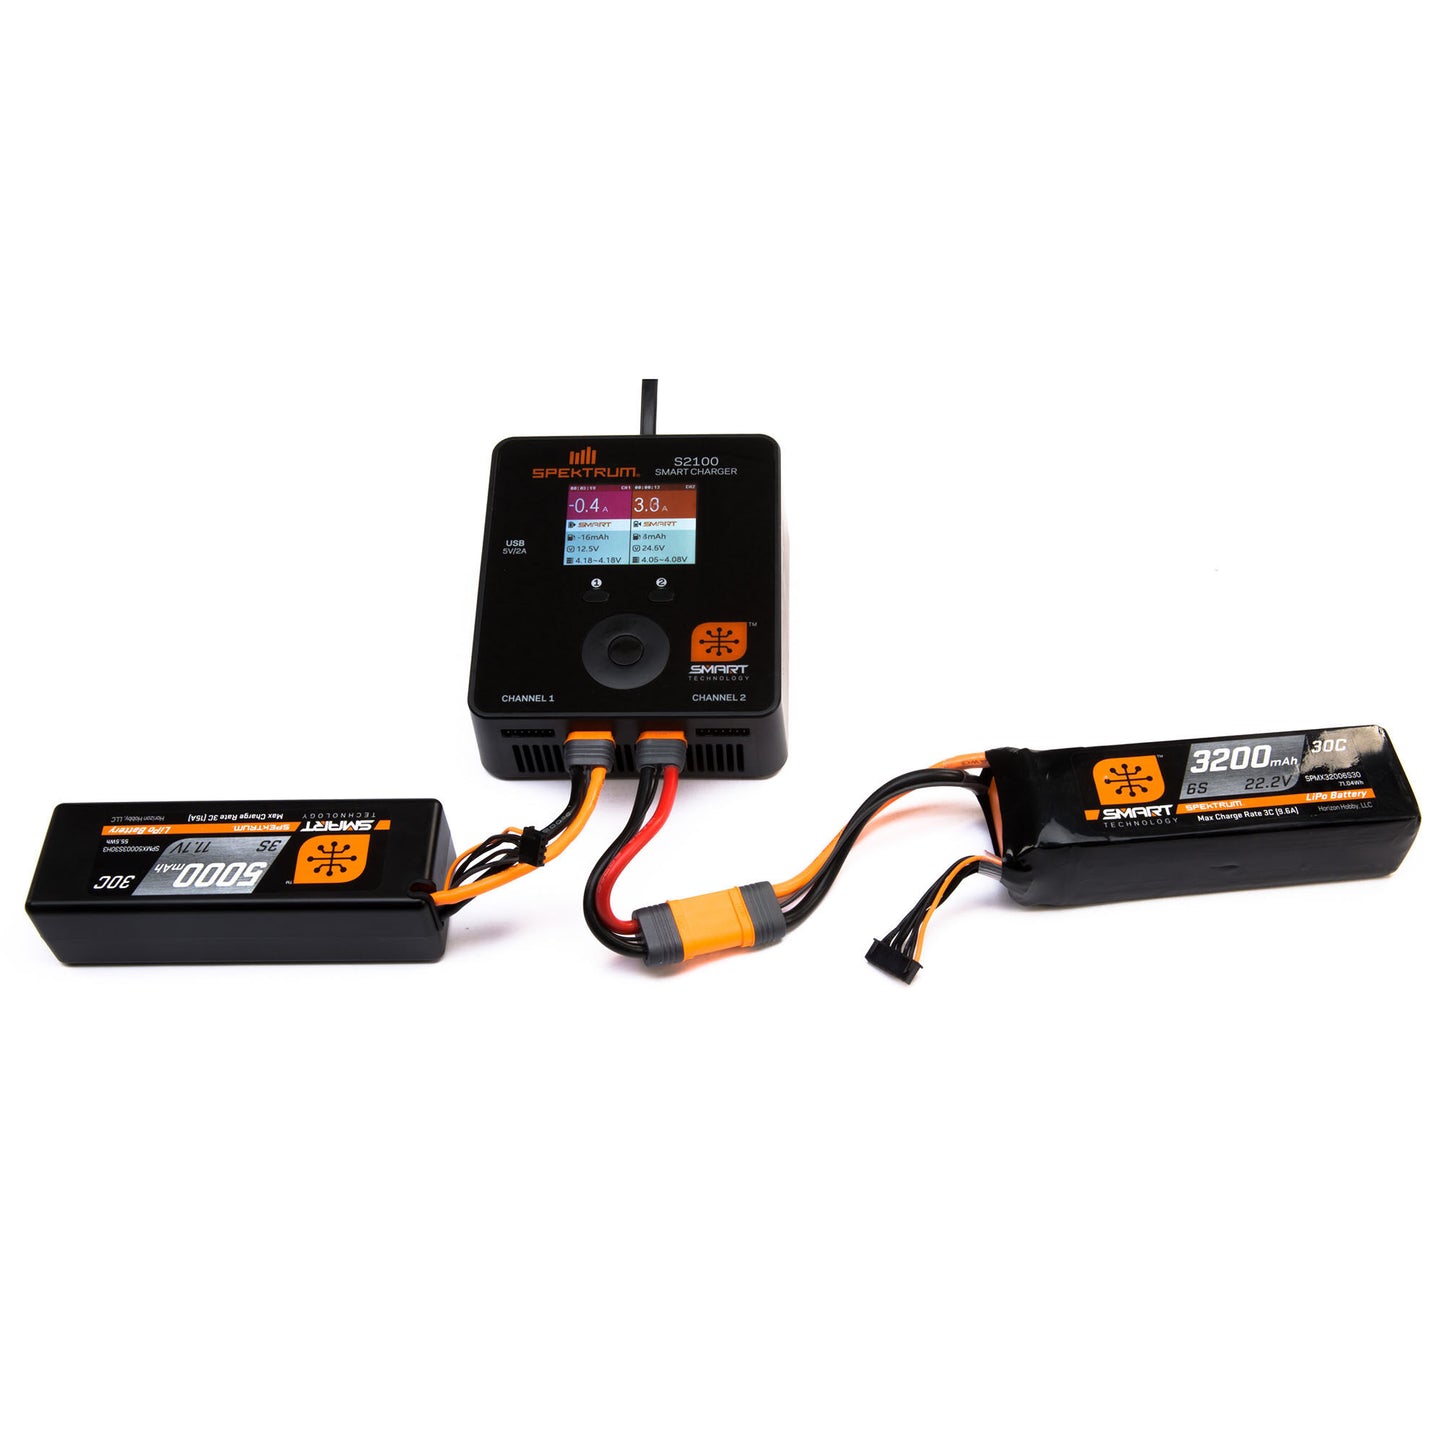 SPMX50006S30 22.2V 5000mAh 6S 30C Smart LiPo Battery, IC5